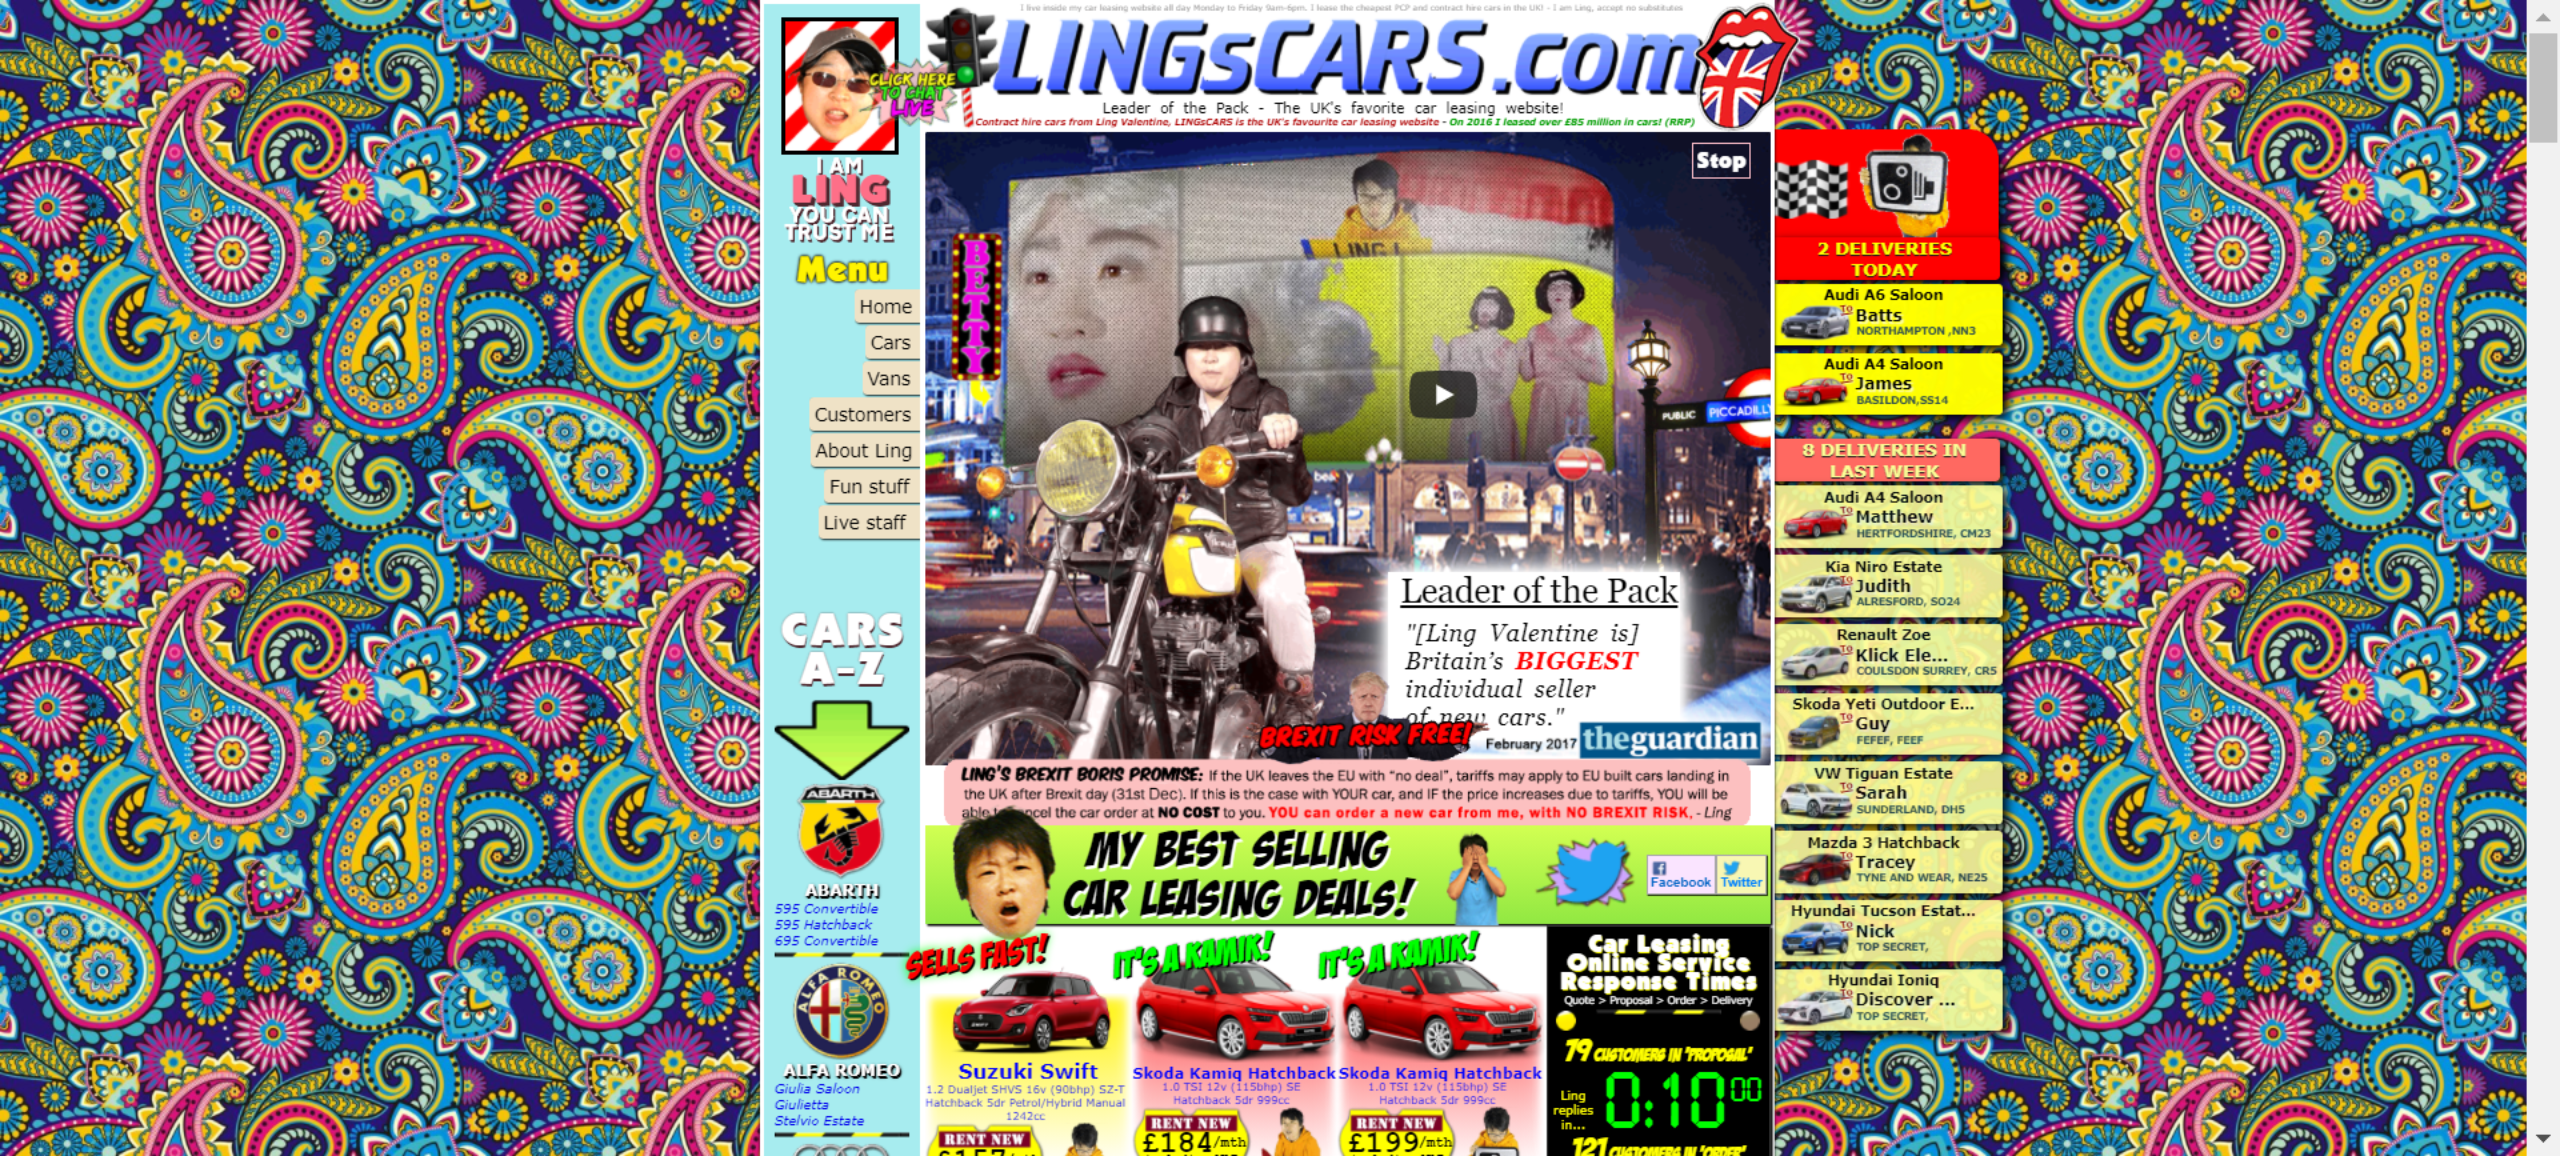 <h3>lings cars website</h3>